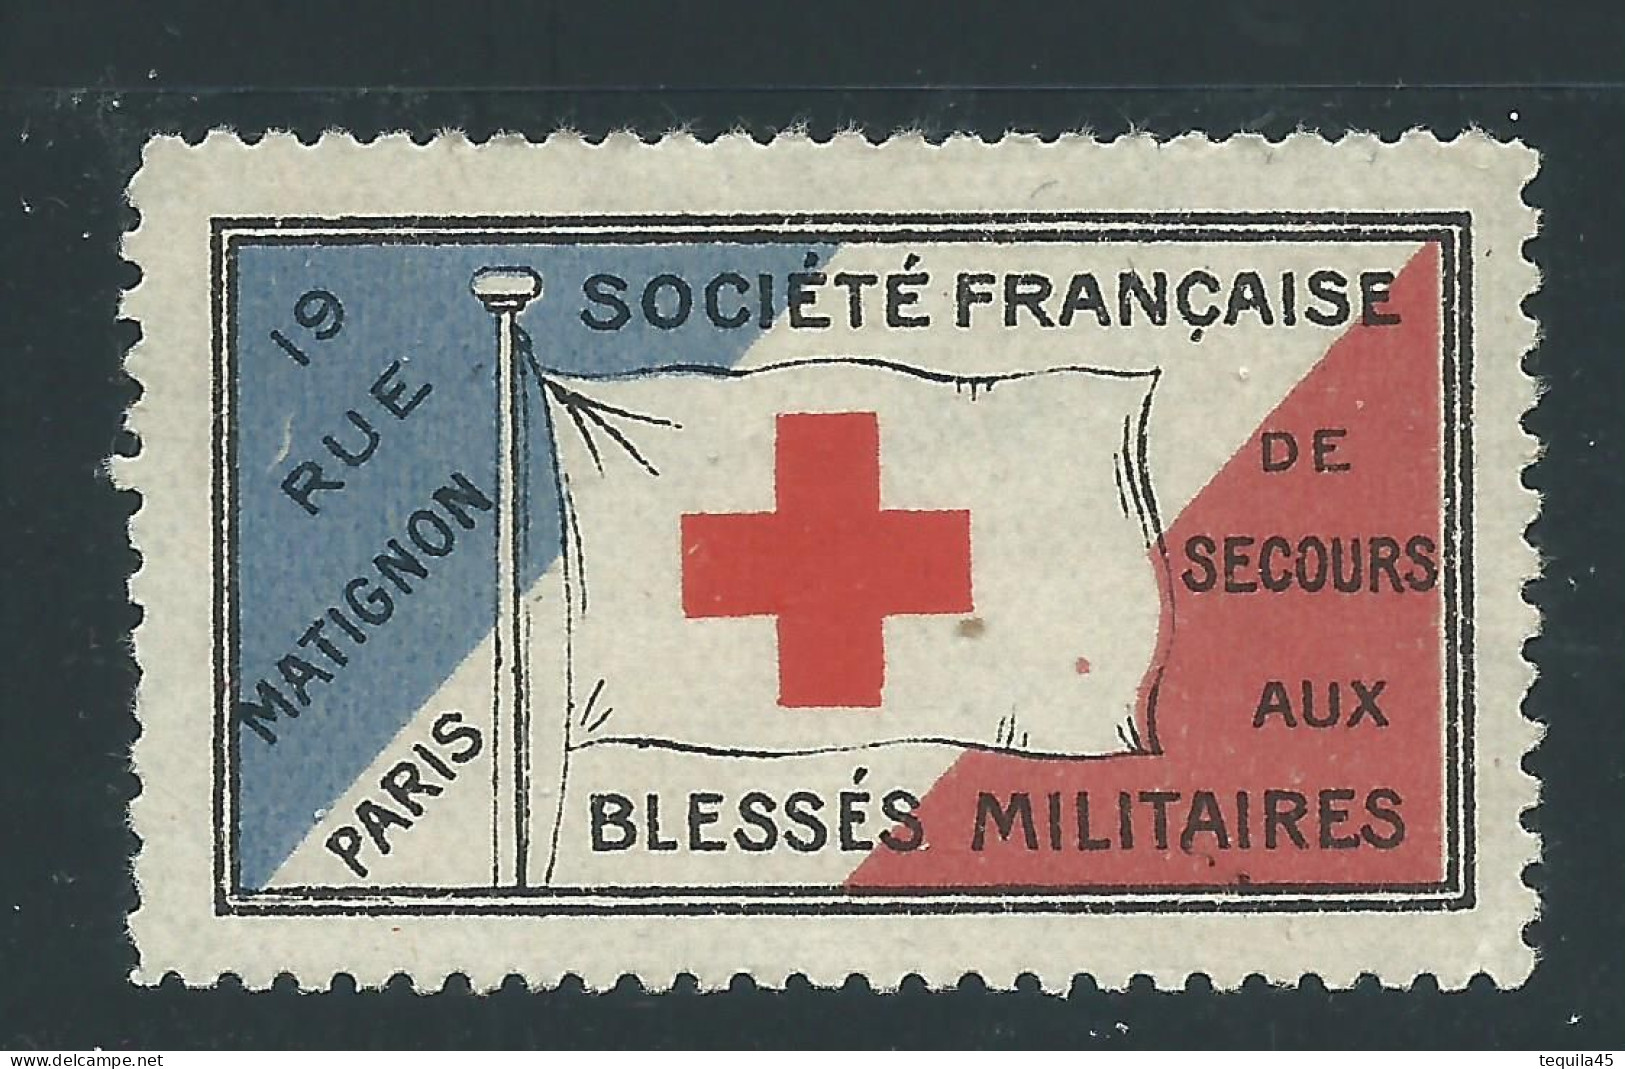 VIGNETTE DELANDRE - Secours Blessés Militaires - France - WWI WW1 Cinderella Poster Stamp Grande Guerre 1914 1918 - Croce Rossa